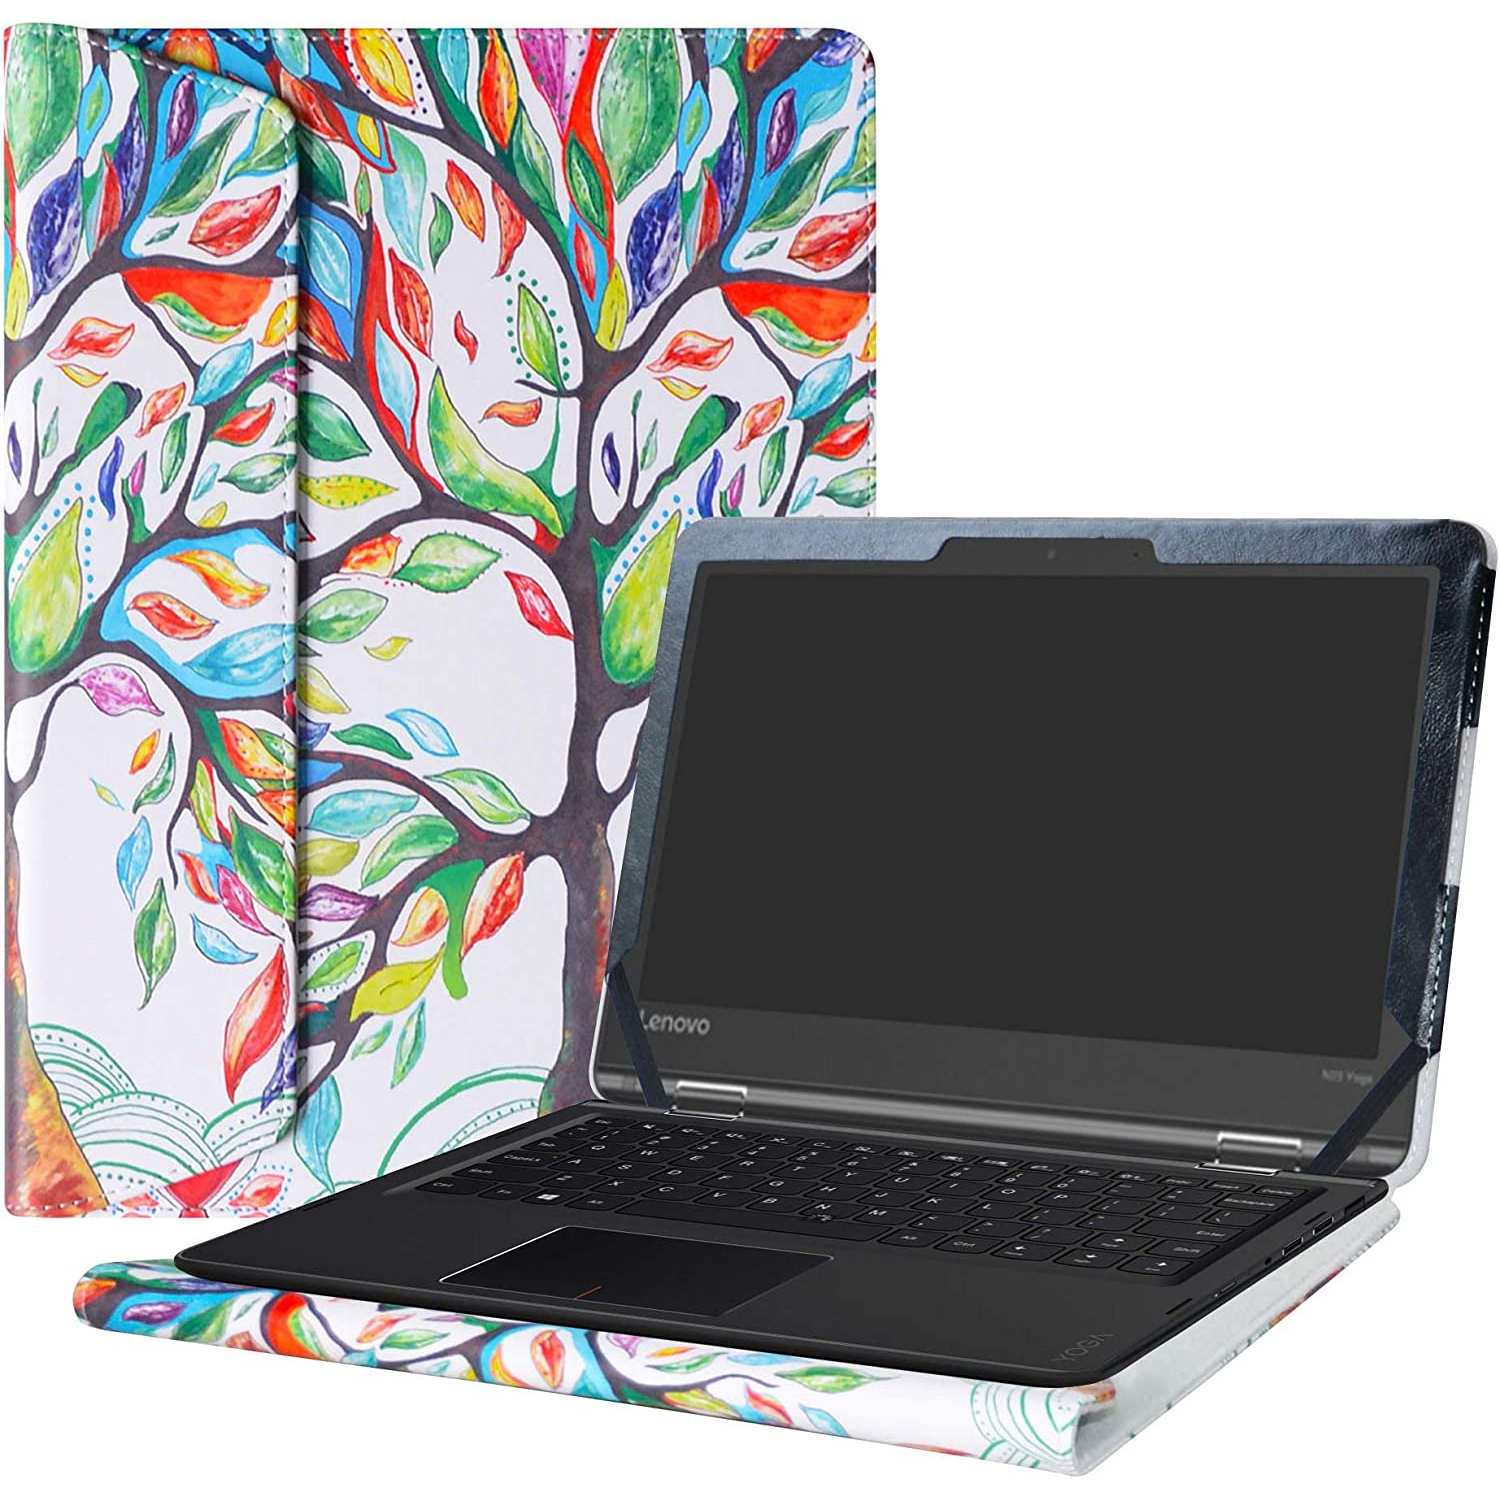 Protective Case Cover for 11.6" Lenovo Flex 11 CHROMEBOOK/Lenovo N23 Yoga Chromebook/Lenovo ThinkPad 11e Yoga